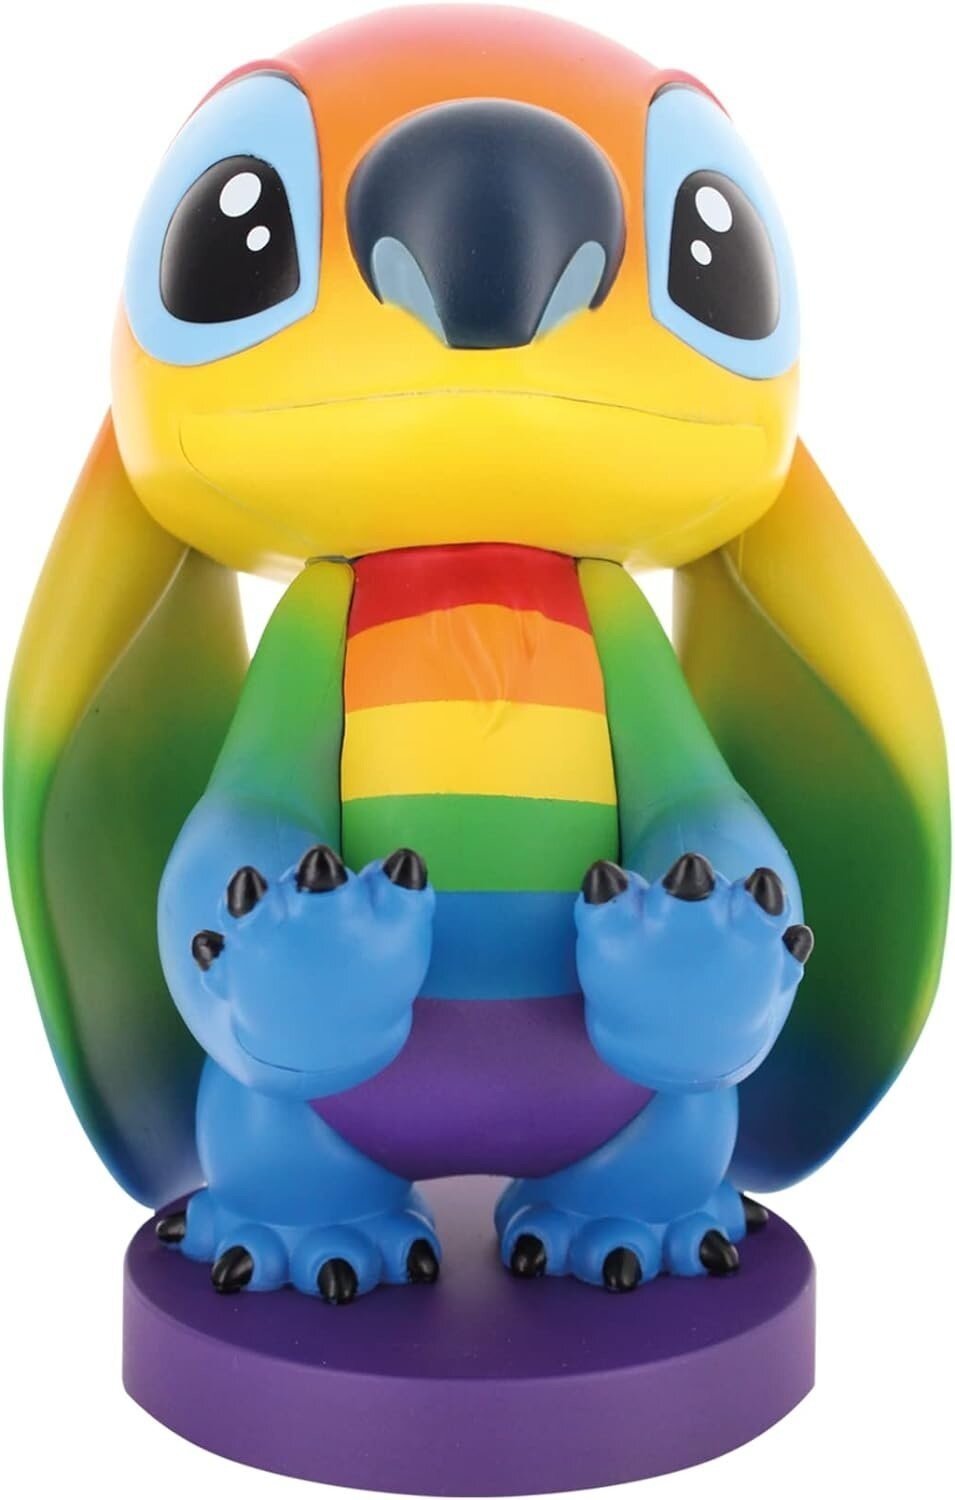 Figurka Cable Guy - Rainbow Stitch - CGCRDS400549